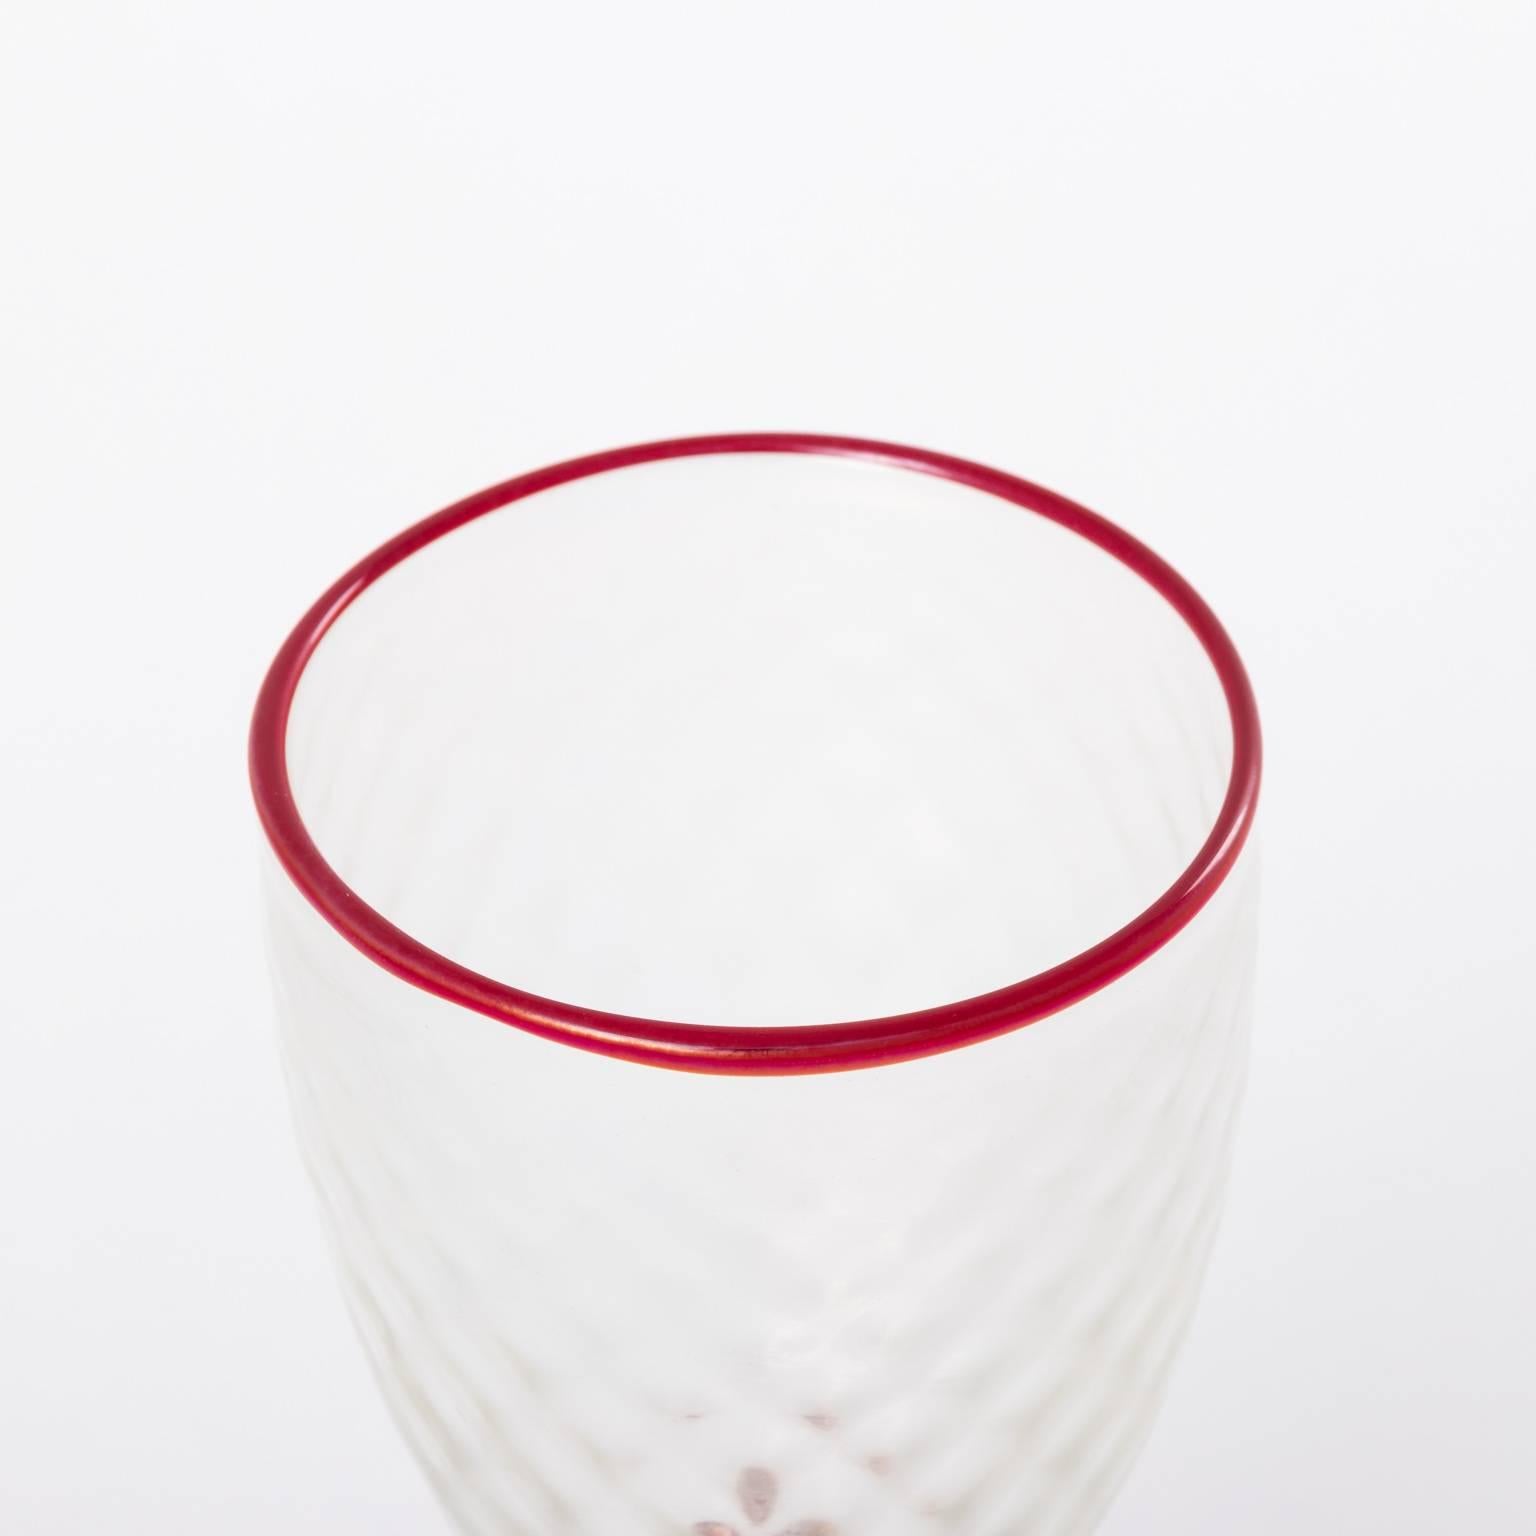 American Four Rick Strini Studio Diamond Luster Iridescent Red Wine Drinking Glasses